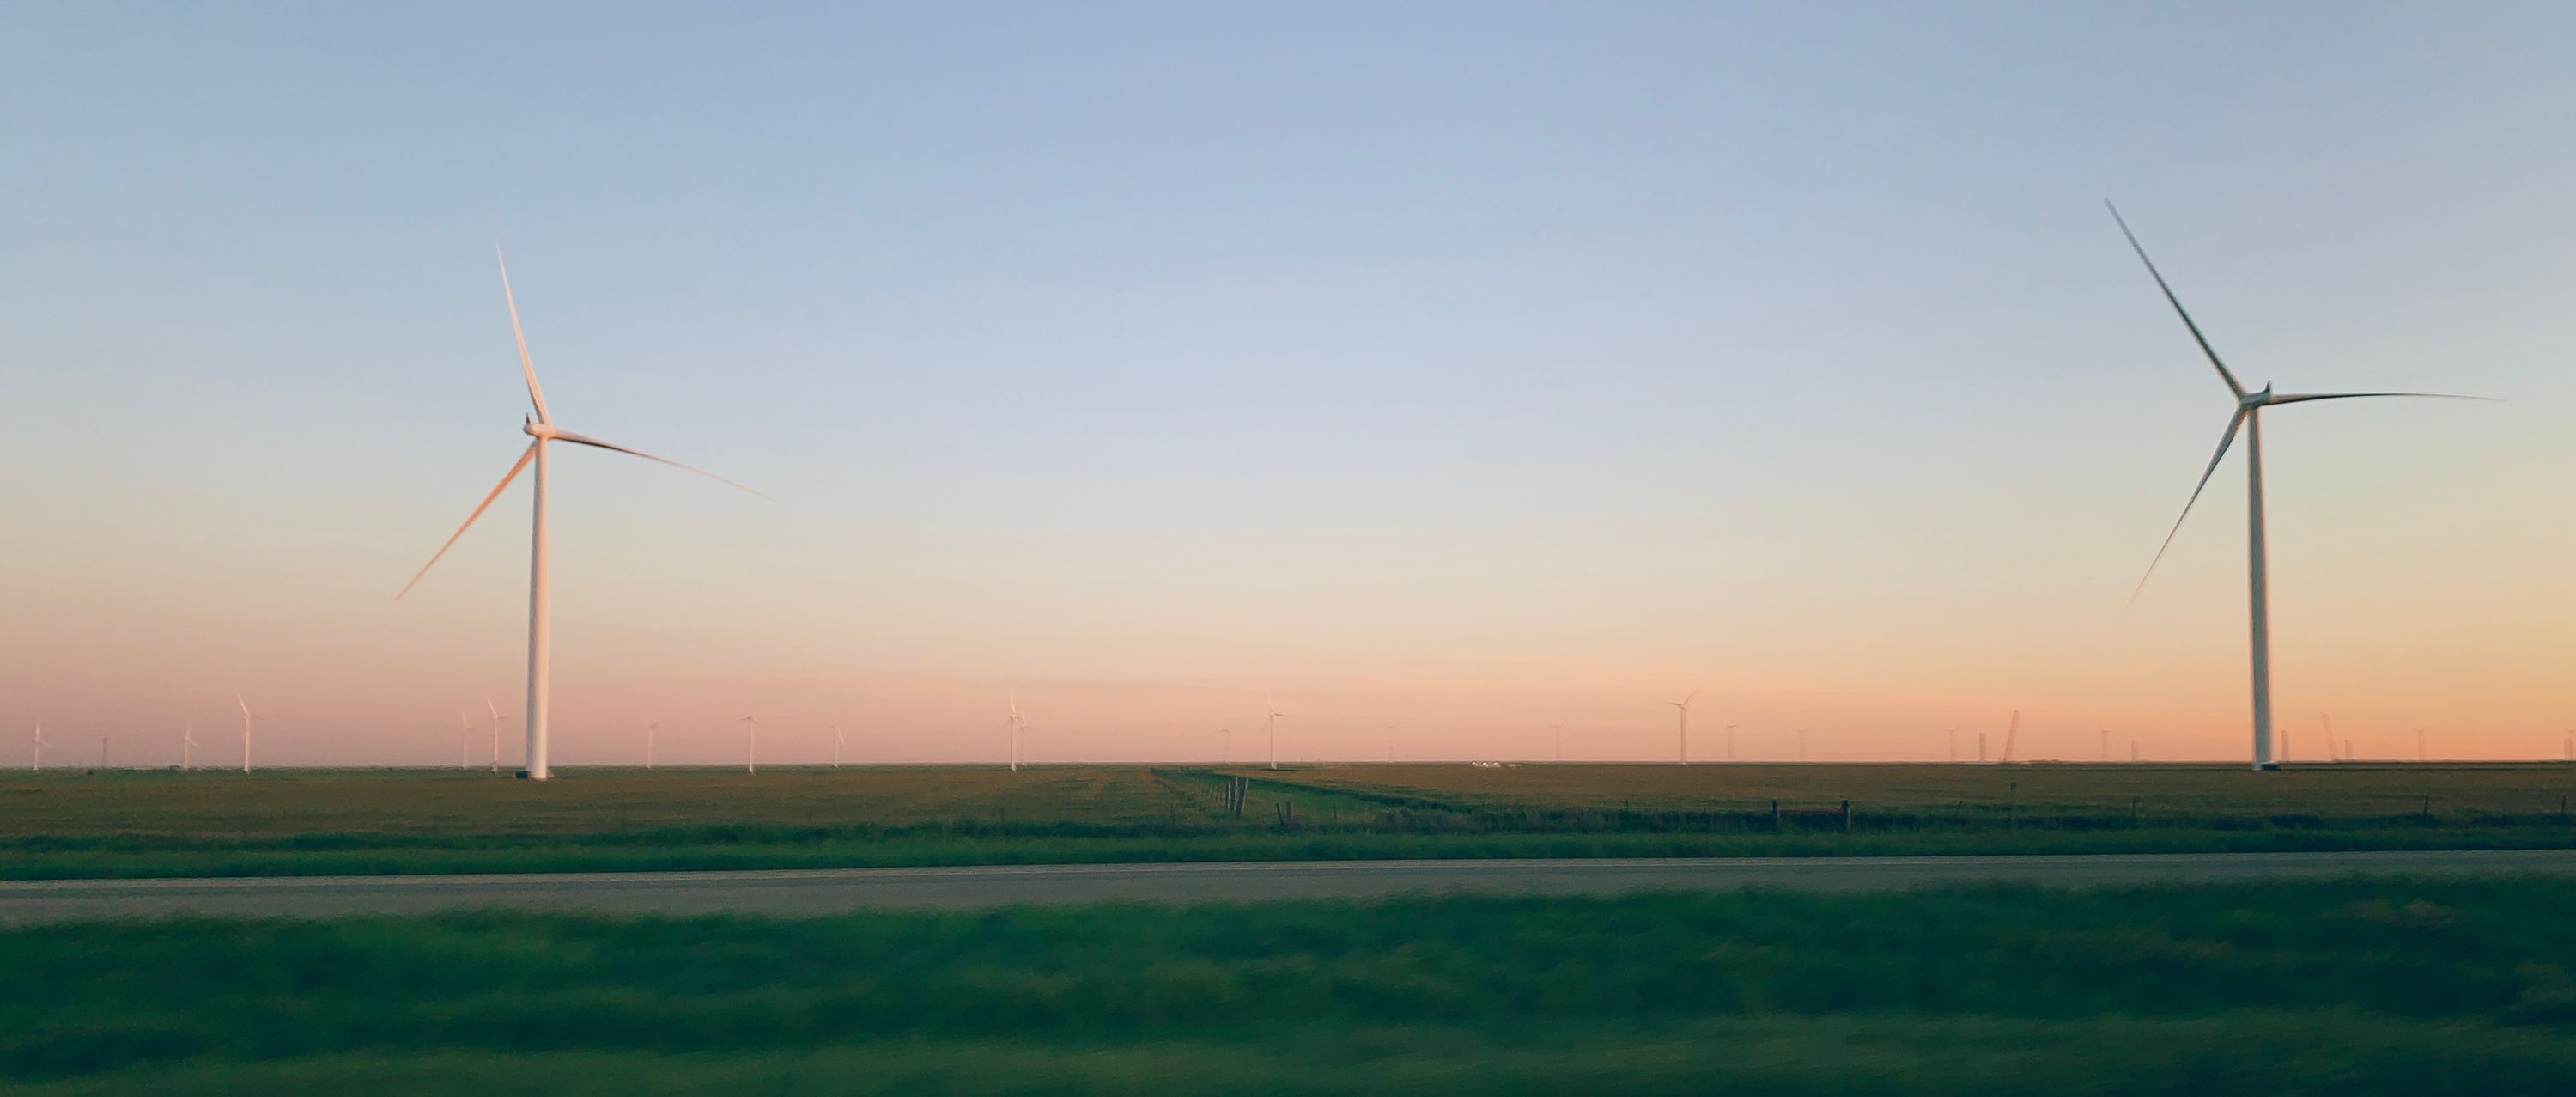 Some windmills in Texas near dusk